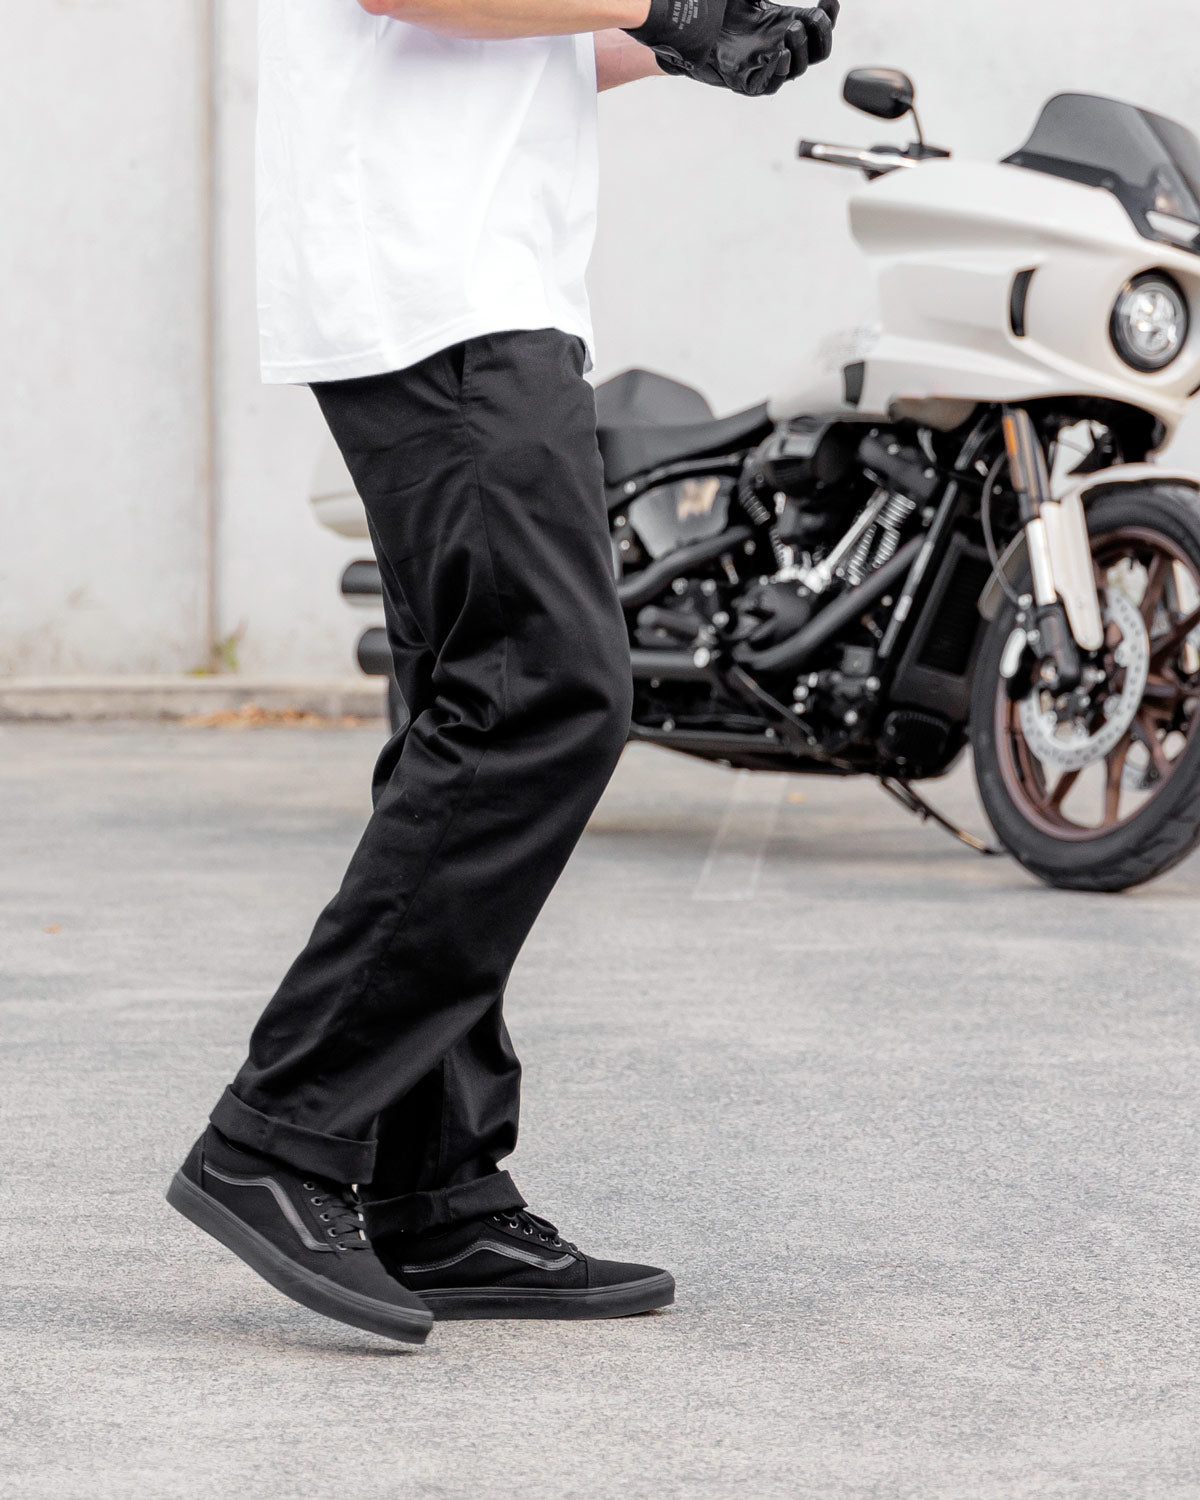 Akin Moto Wrench Protective Motorcycle Pants